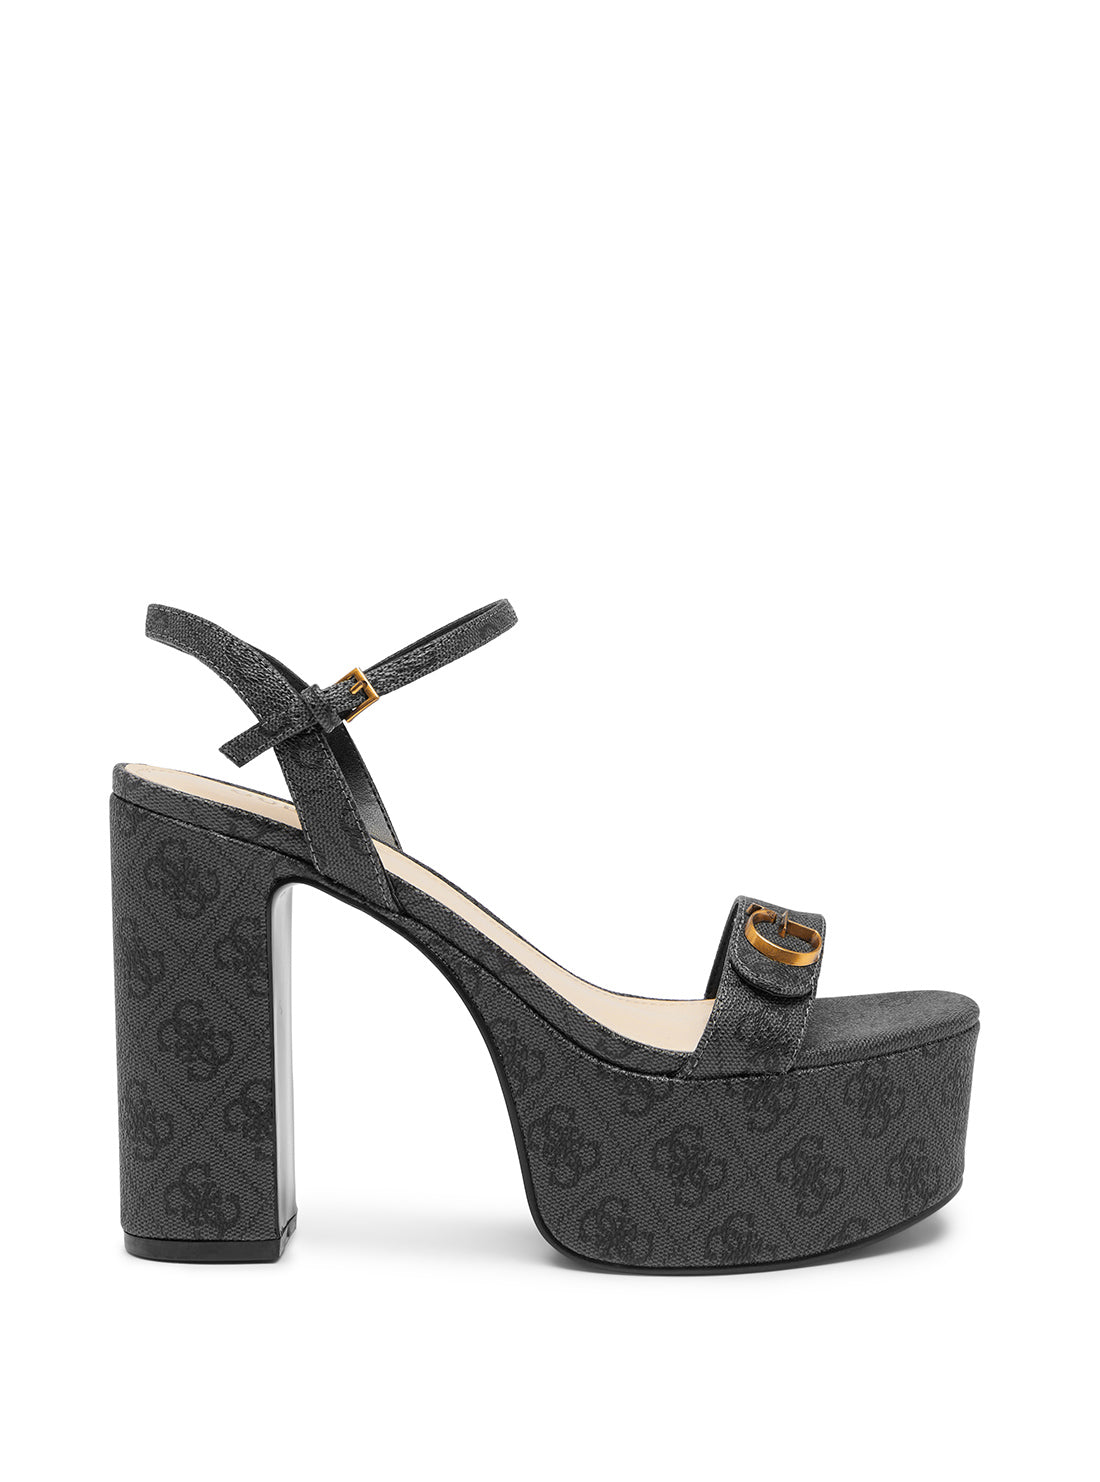 Black Logo Sherrill Platform Sandal Heels | GUESS Women's Heels | side view